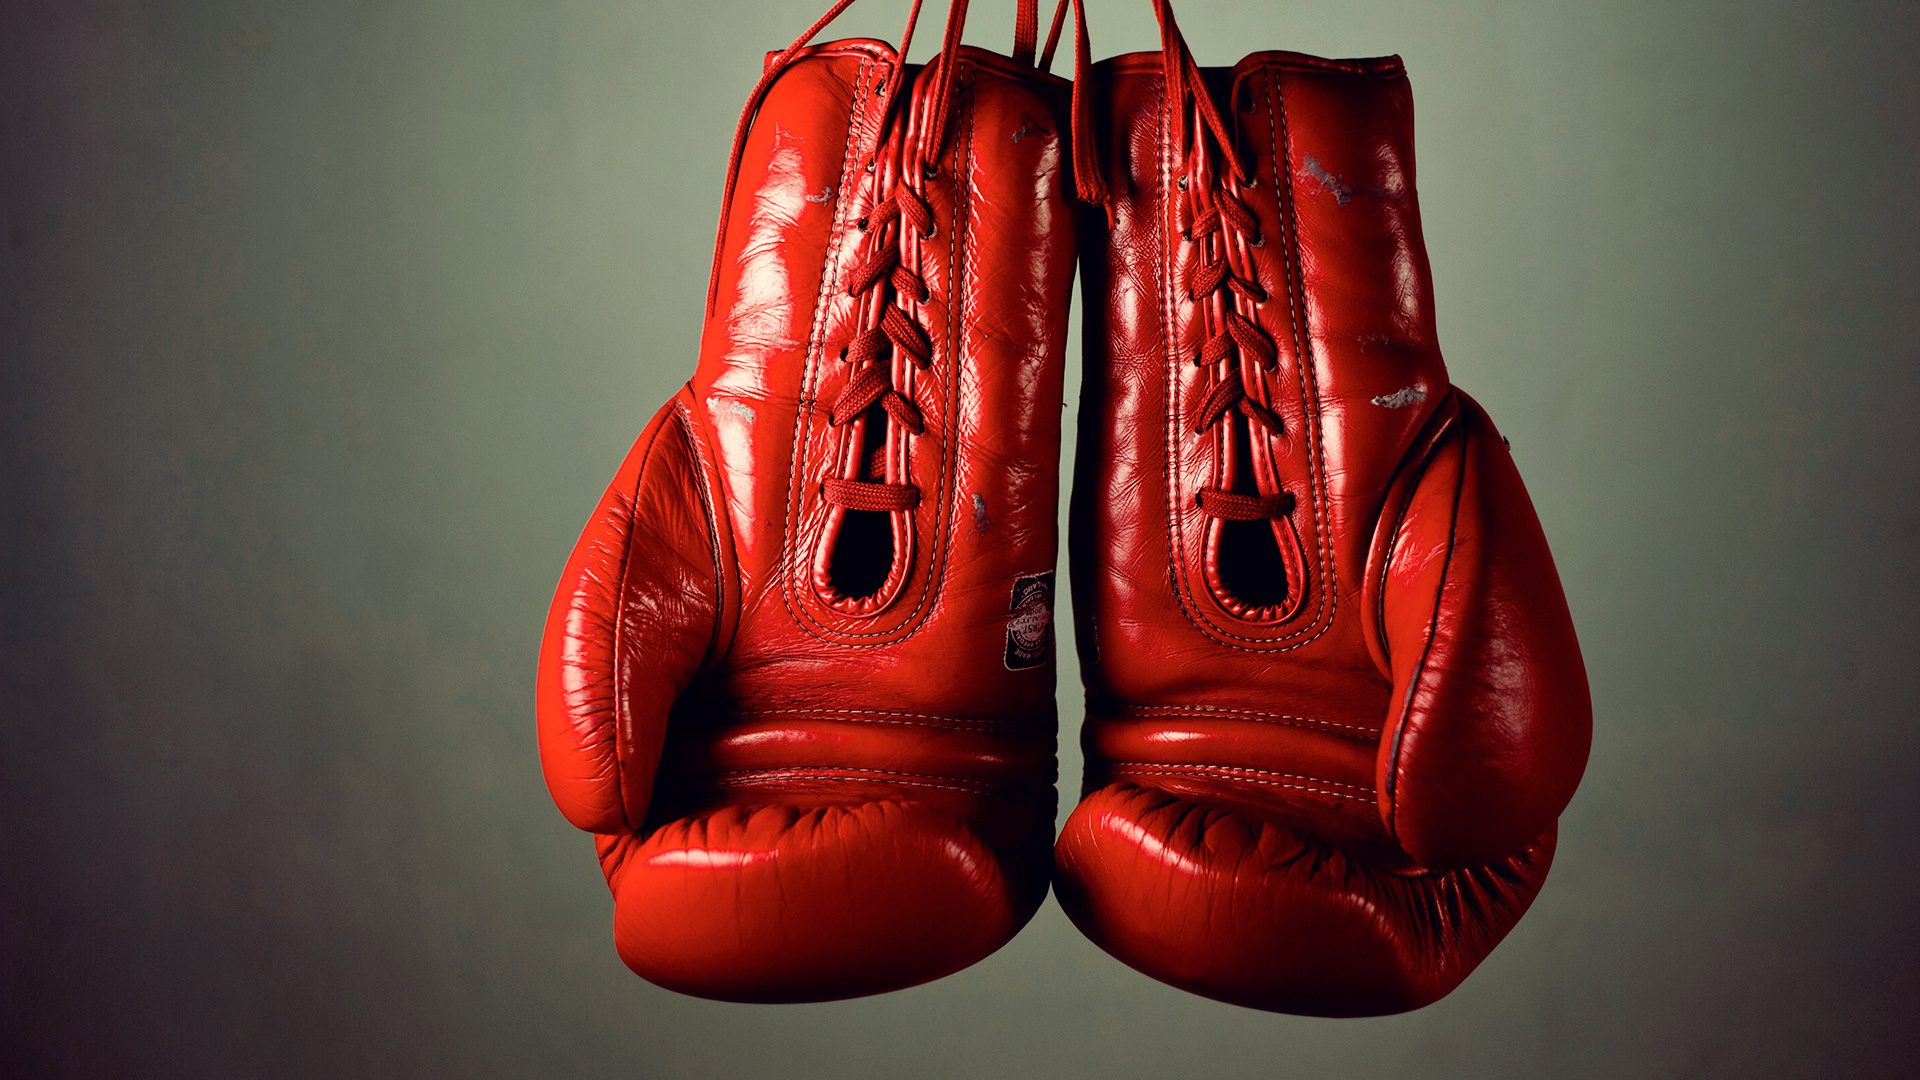 Boxing gloves, Sports equipment, Training gear, Fitness accessories, 1920x1080 Full HD Desktop